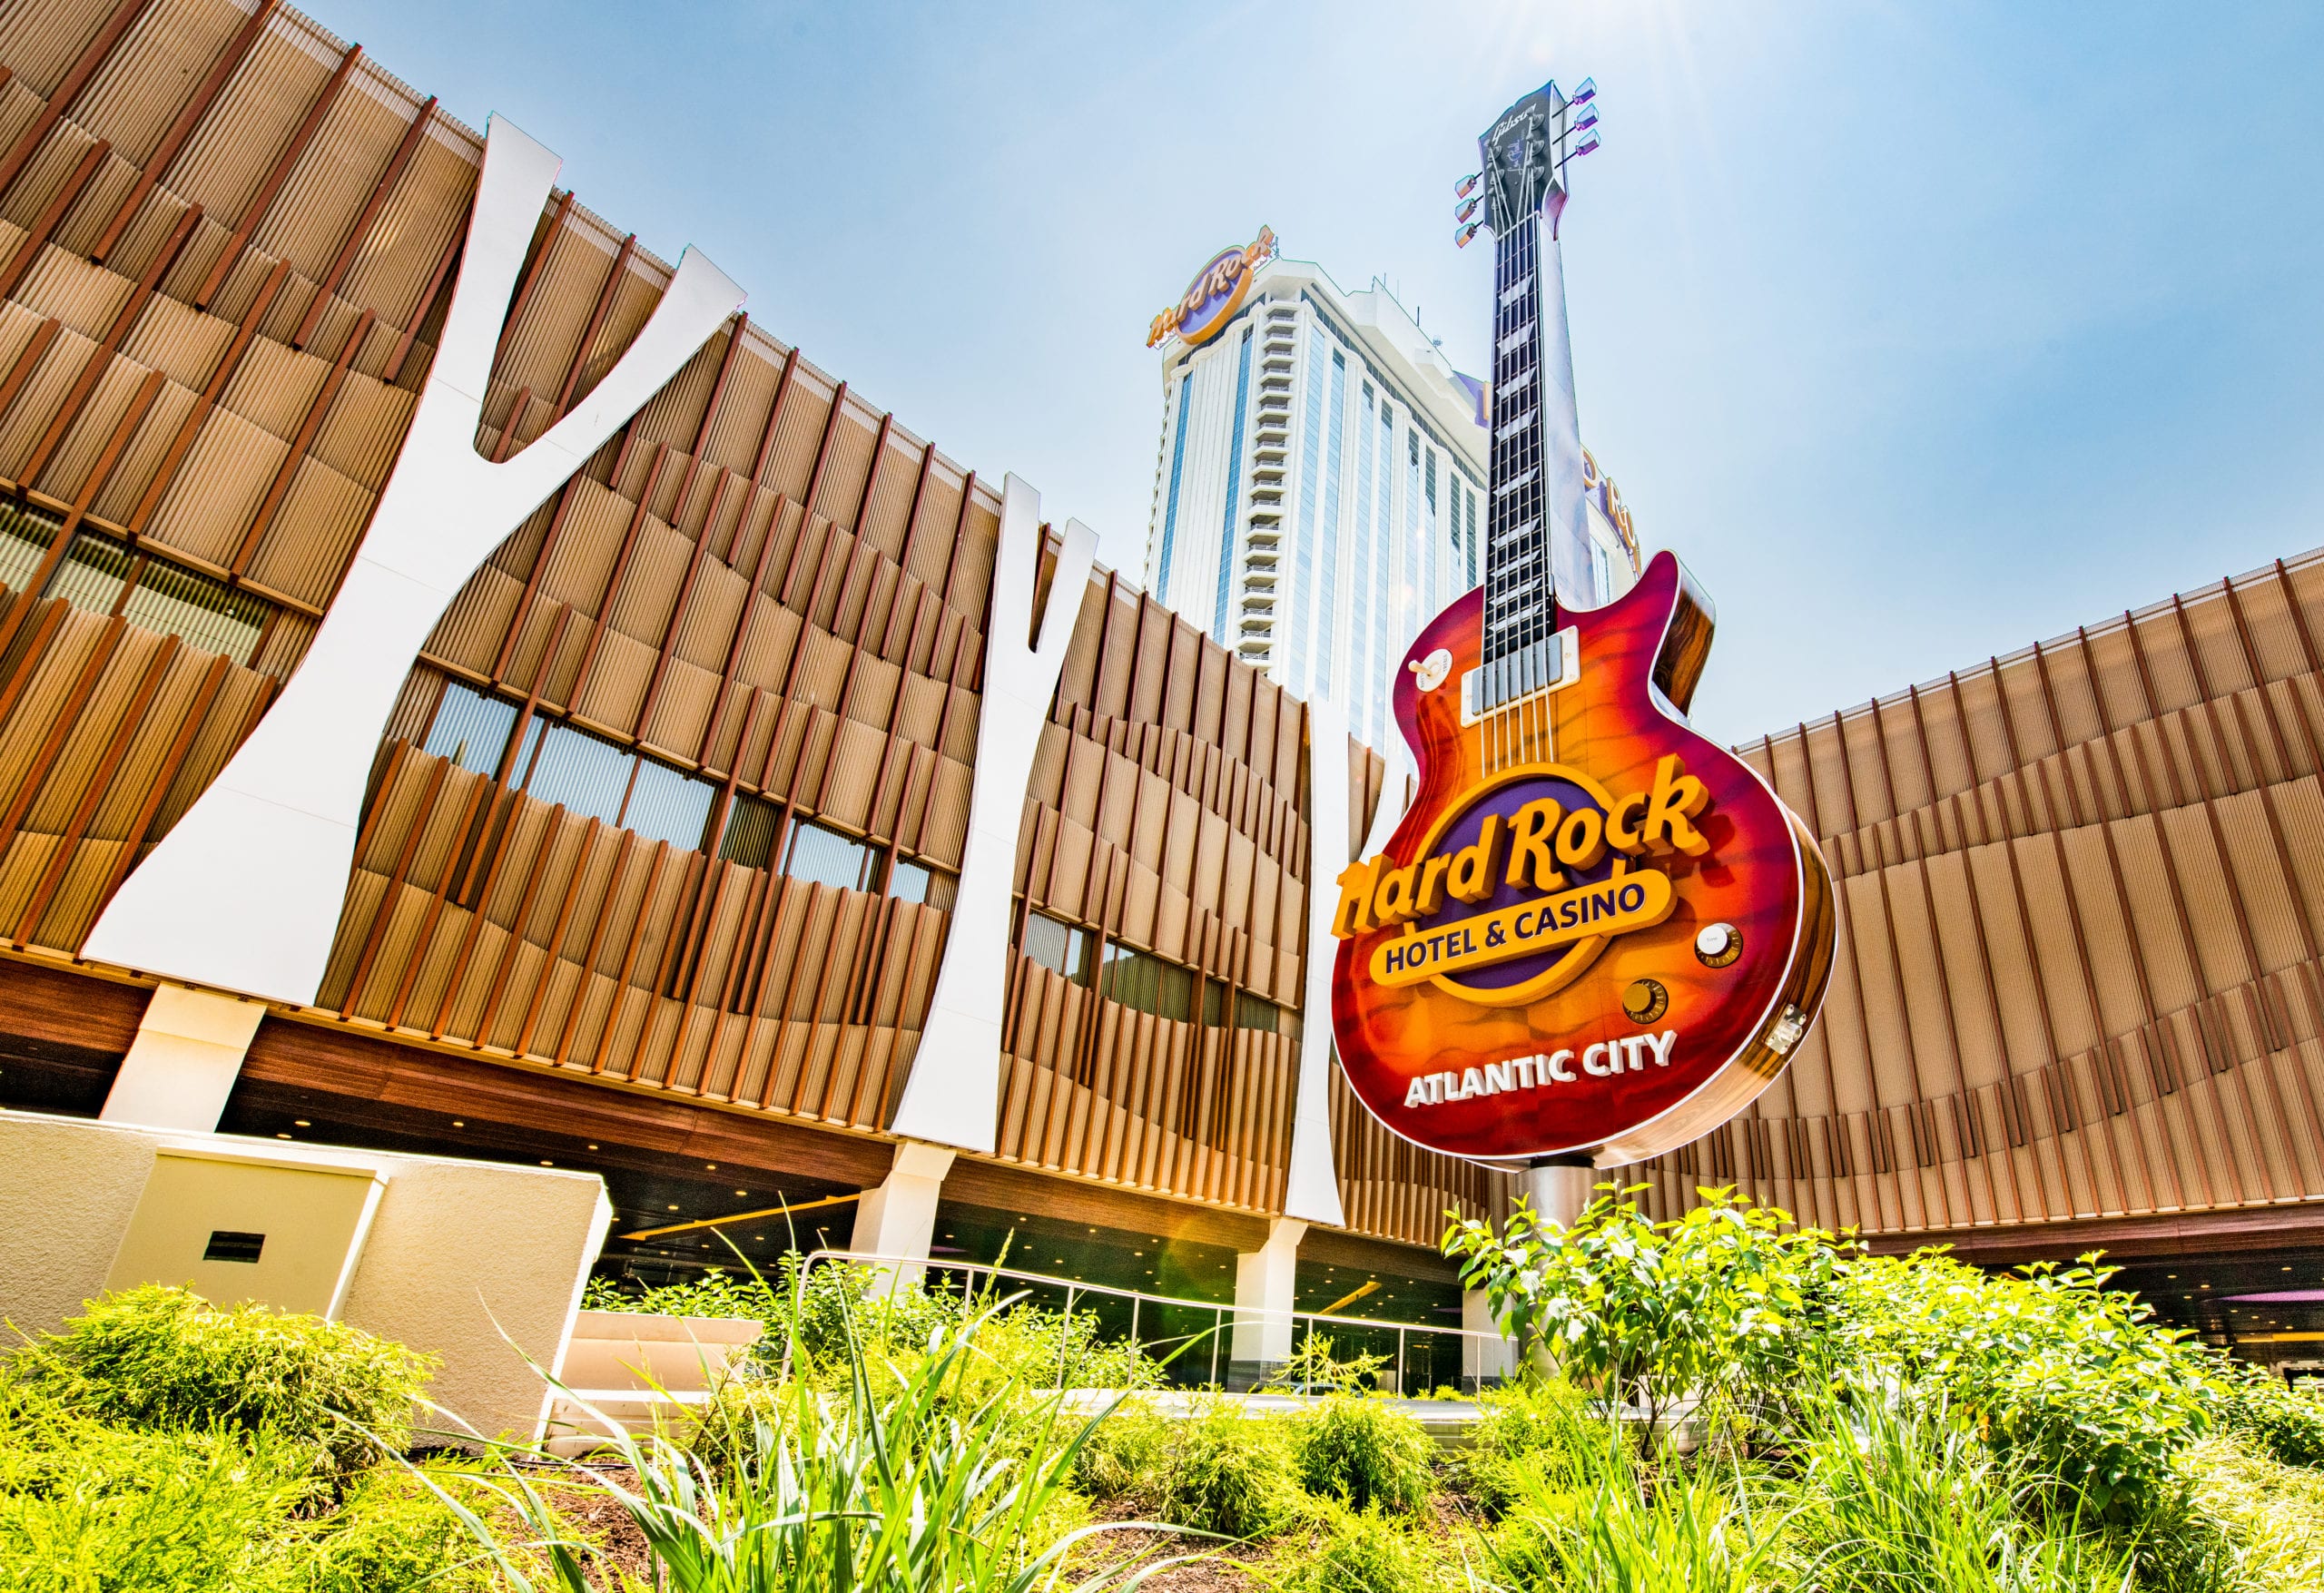 EDSA Hard Rock Hotel & Casino Atlantic City Closeup of guitar in courtyard